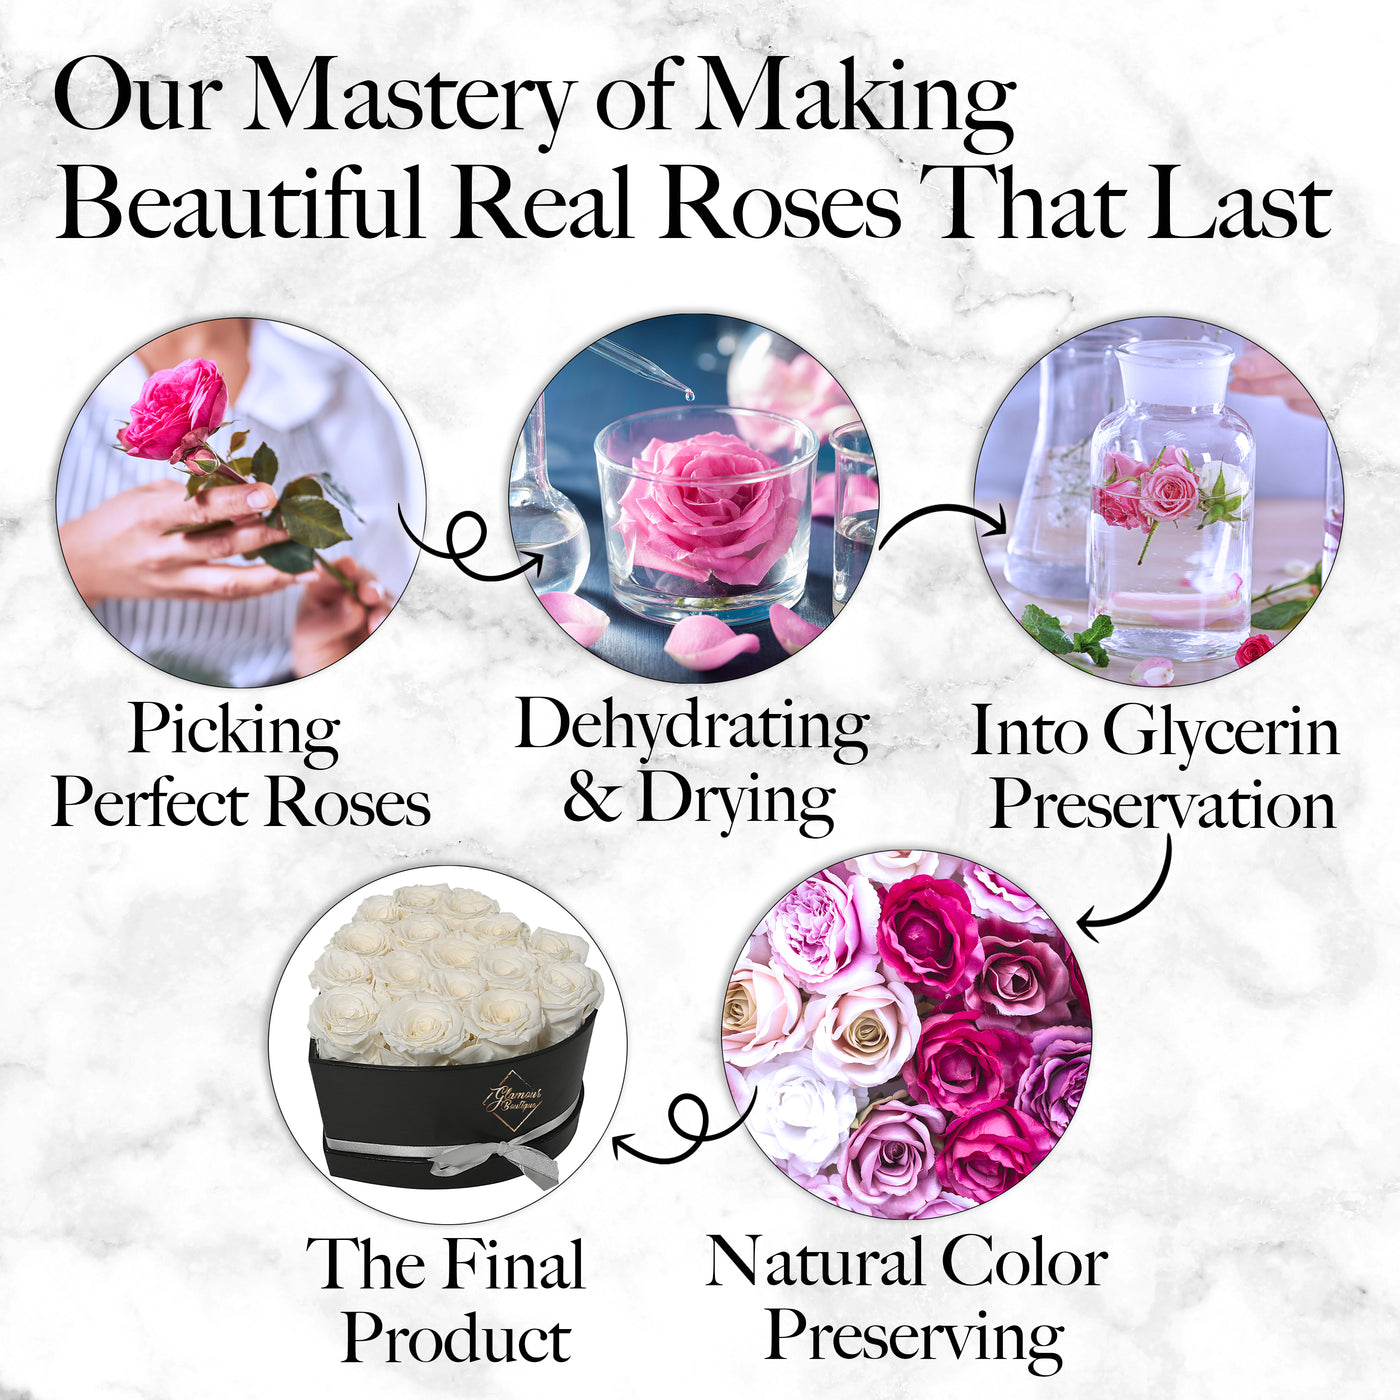 Immortal Love Heart  Box |16 White Roses